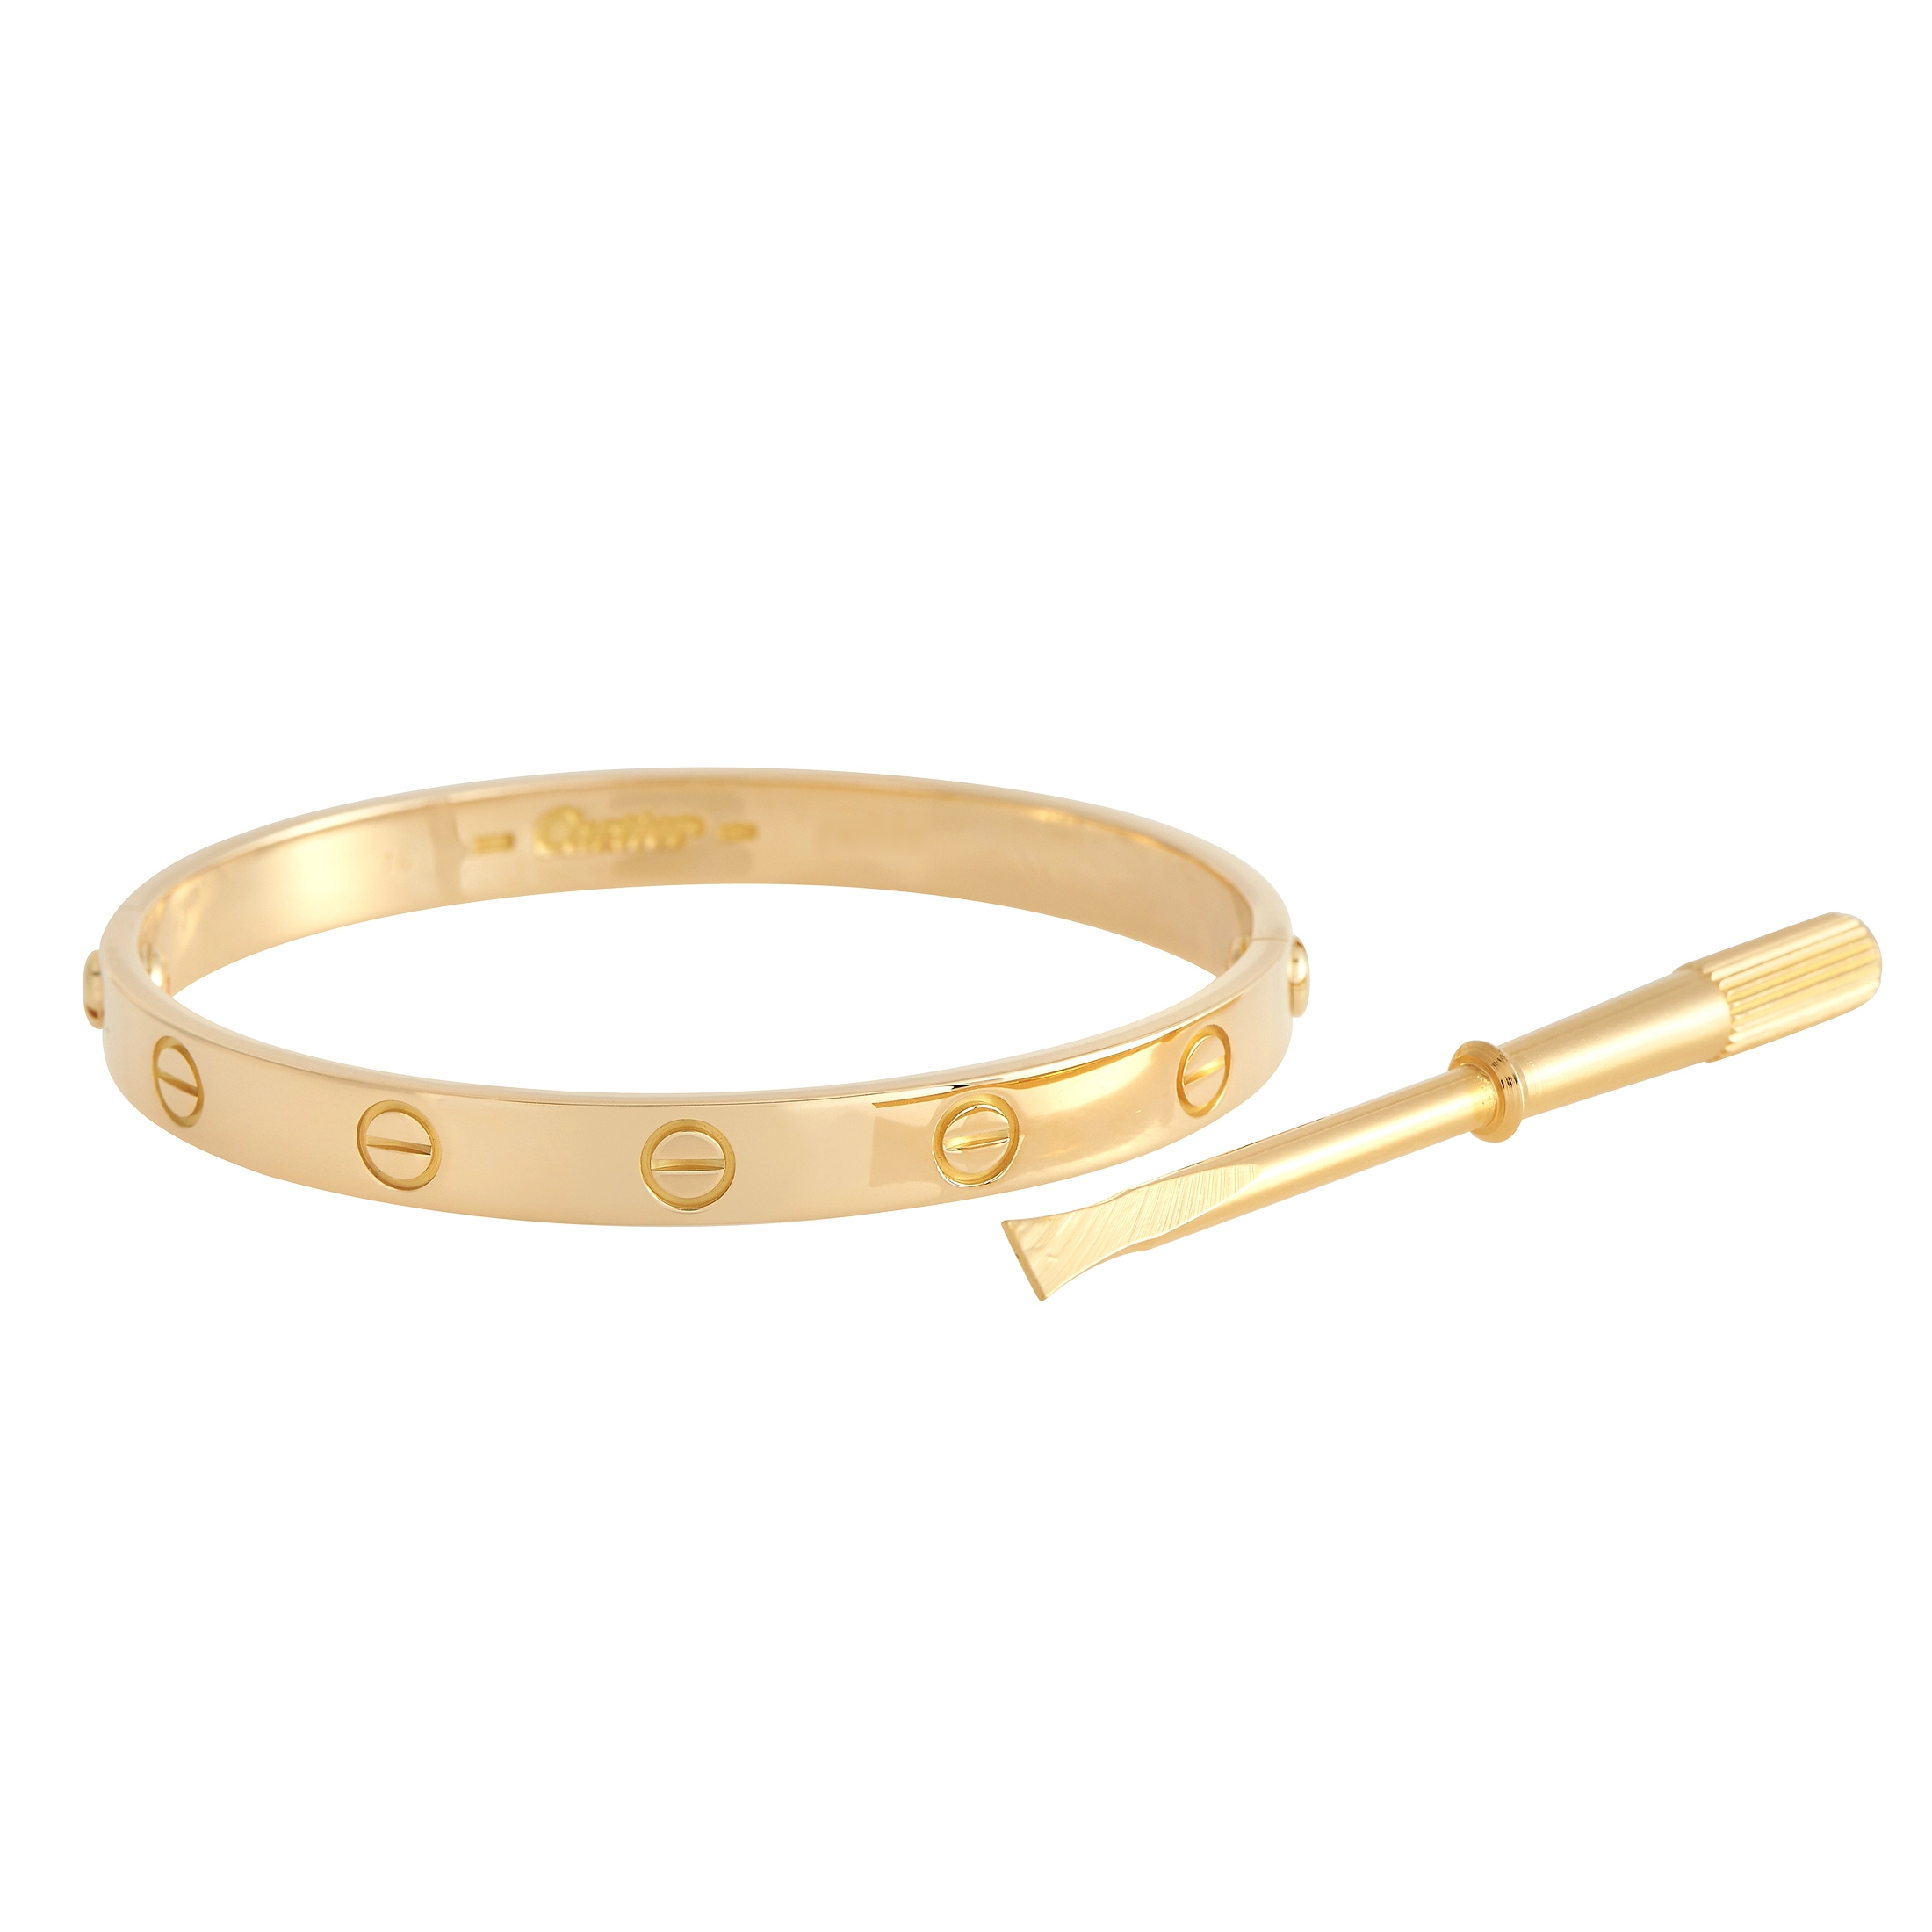 Authentic Cartier Baby Love Bracelet 18K 750 Rose Gold